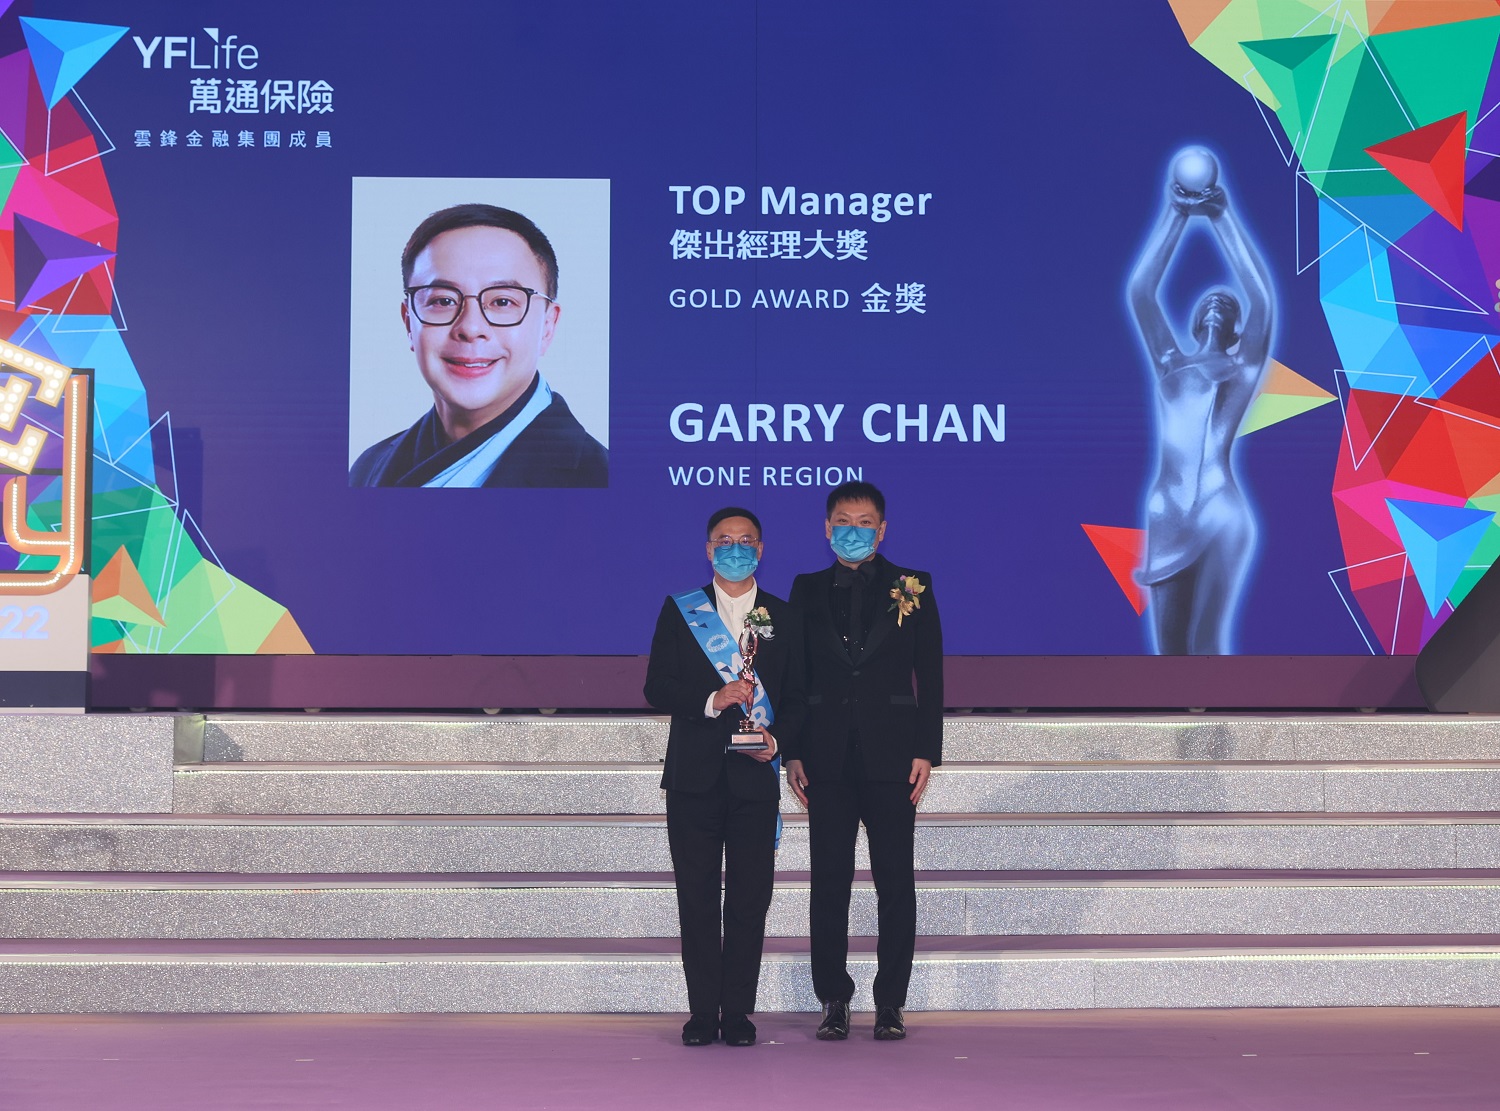 Mr. Garry Chan, Gold Award winner of Top Manager. 